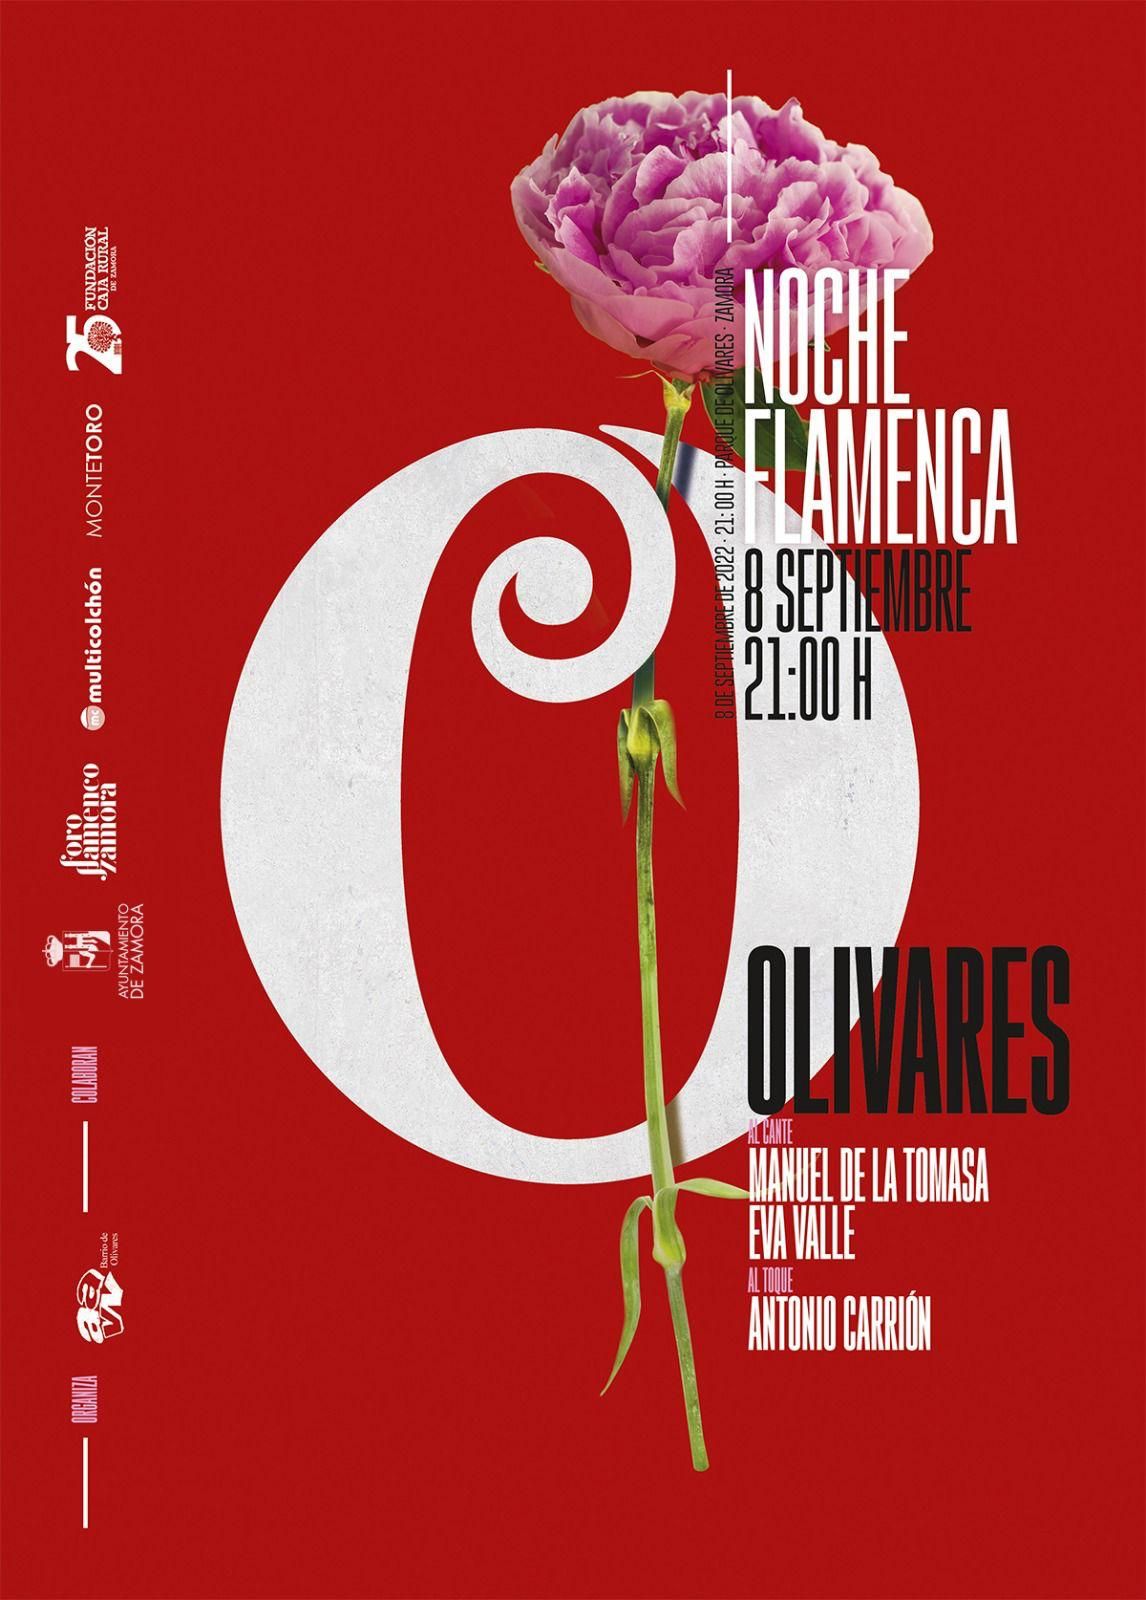 Cartel anunciador de la velada flamenca